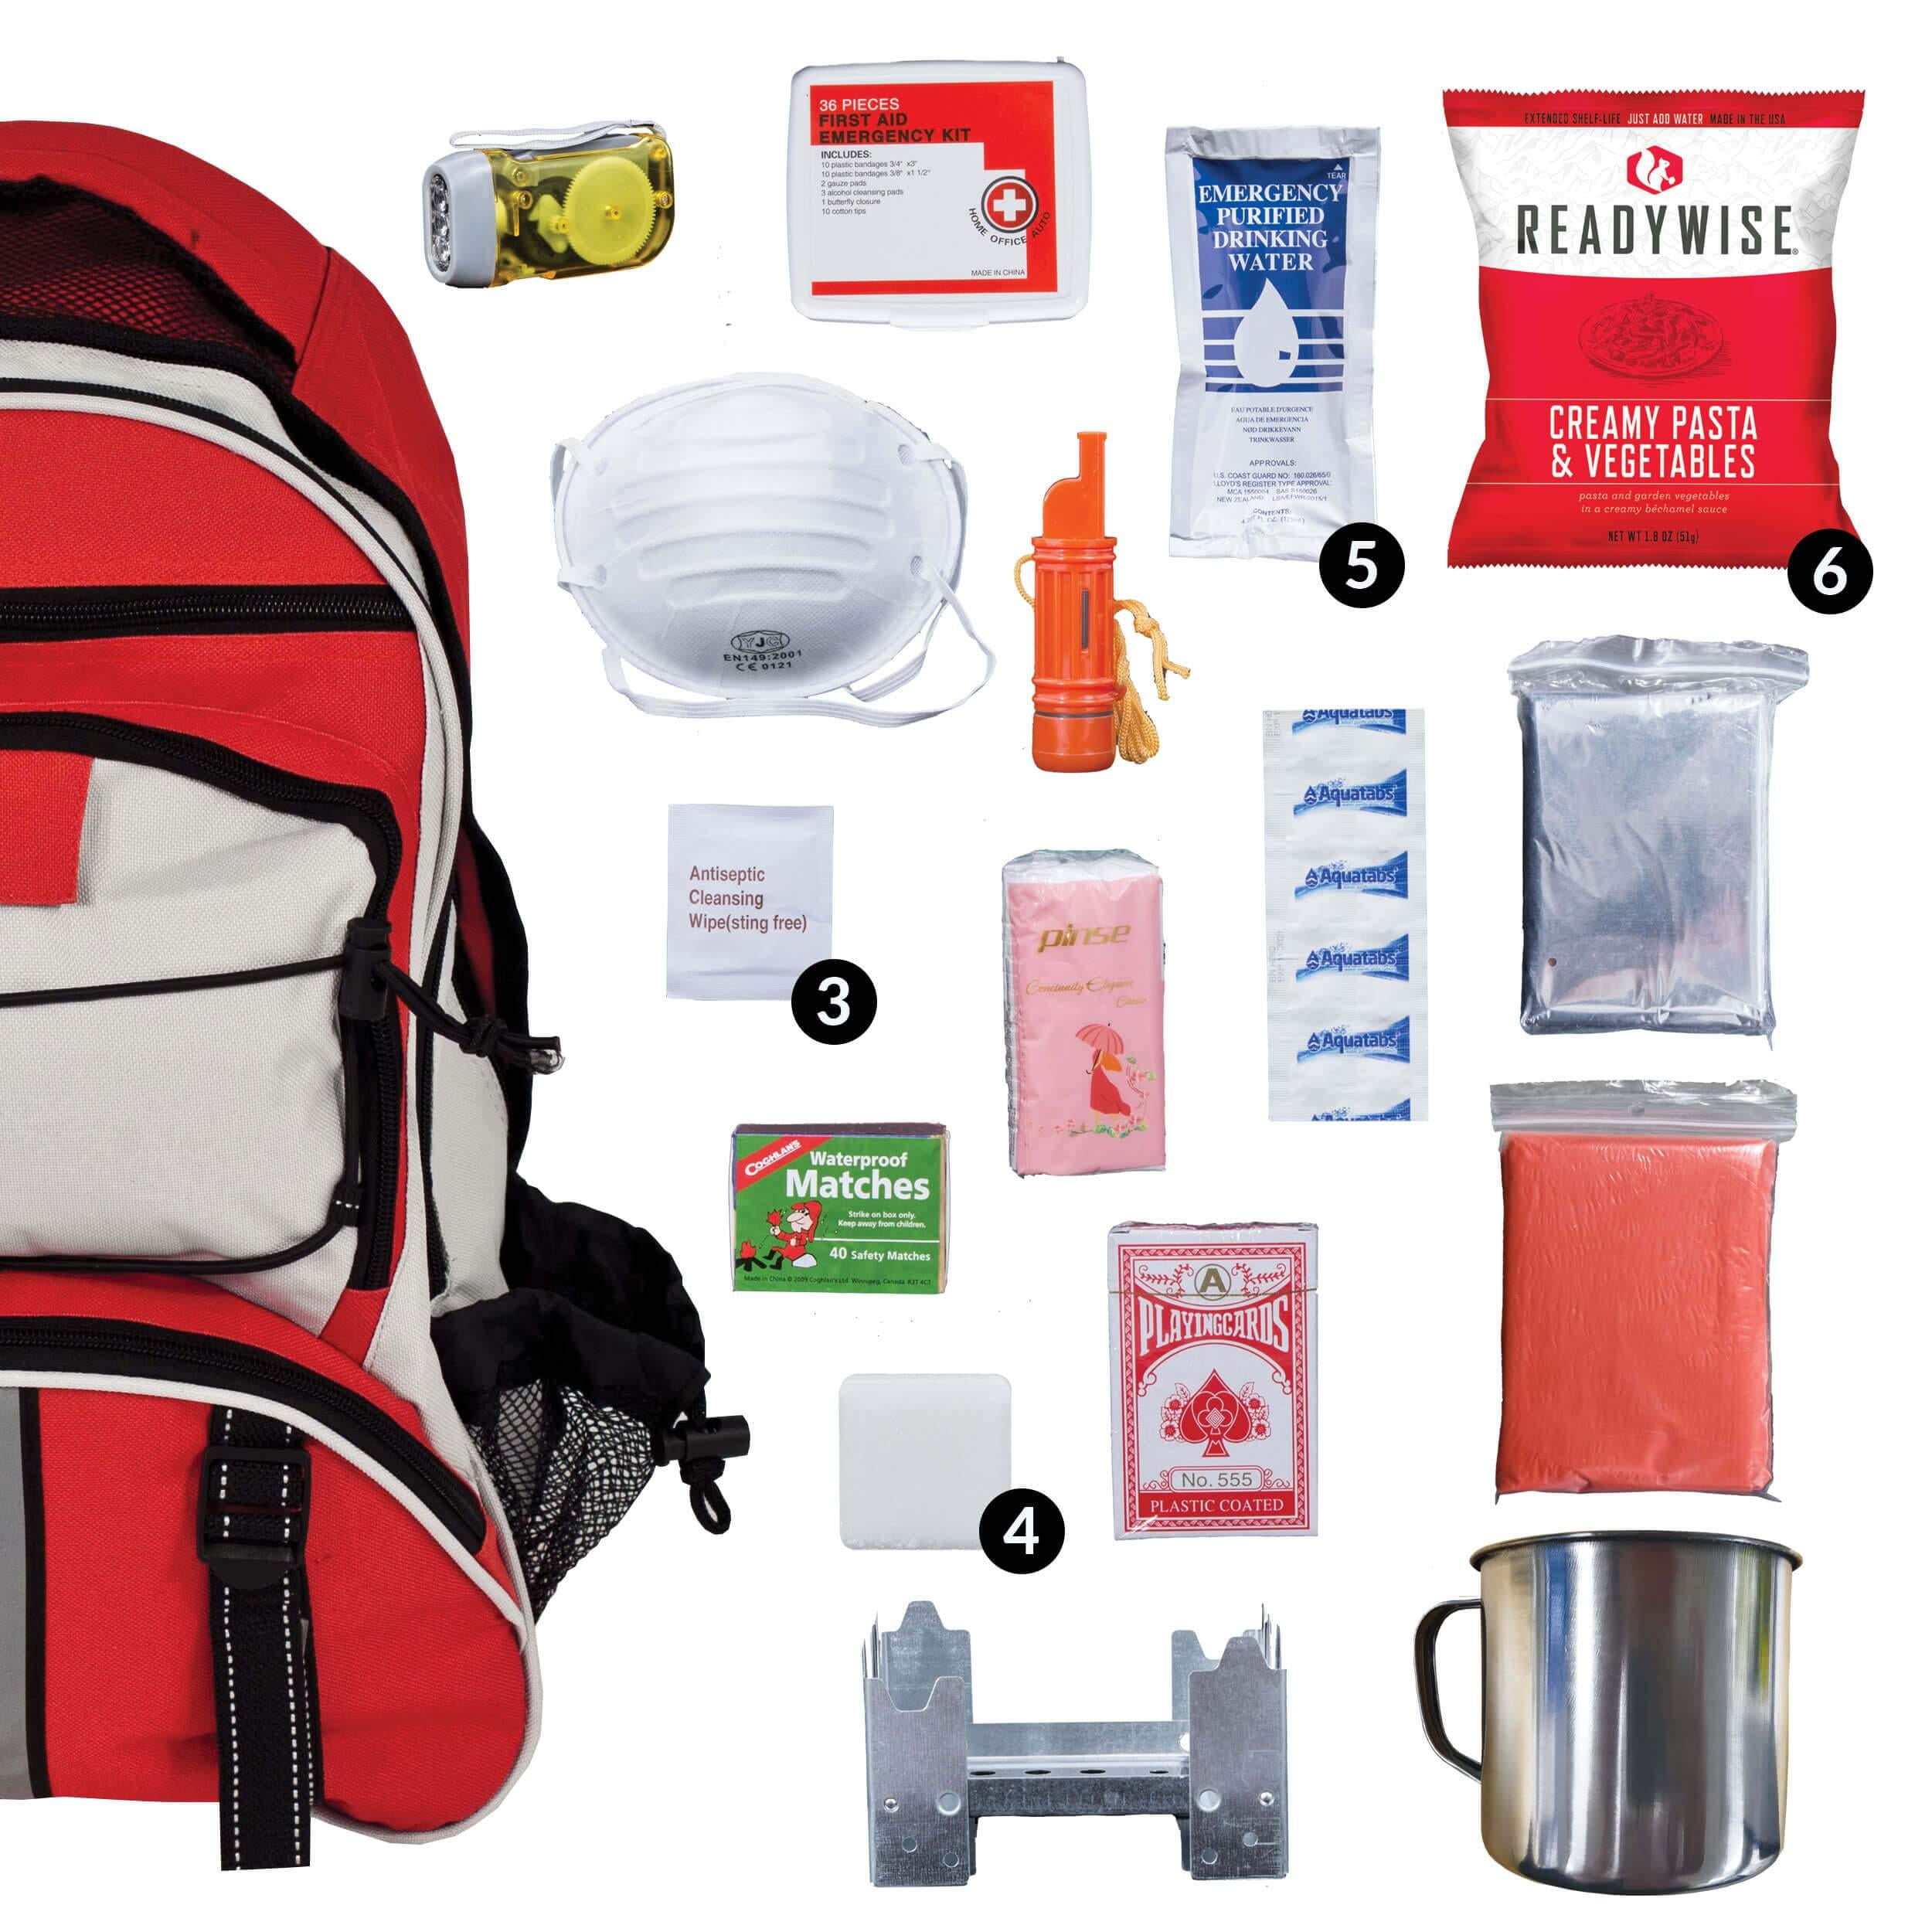 ReadyWise 32 Servings of Emergency Food and Drink & Survival Kit